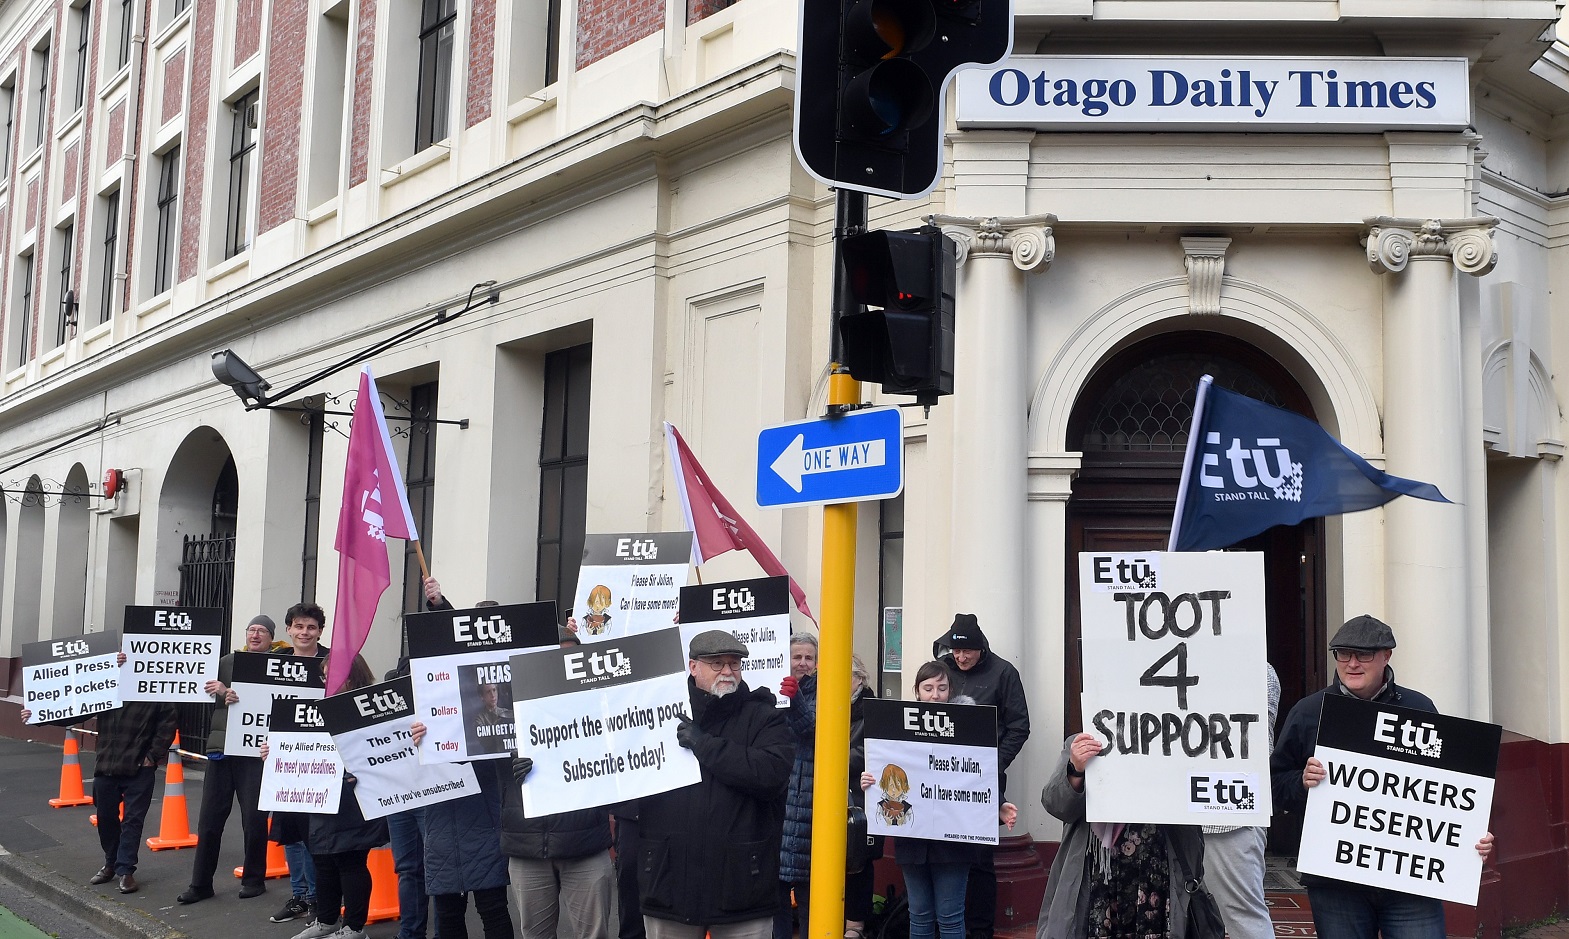 Allied Press staff picket outside the Dunedin office yesterday. Photo: Stephen Jaquiery